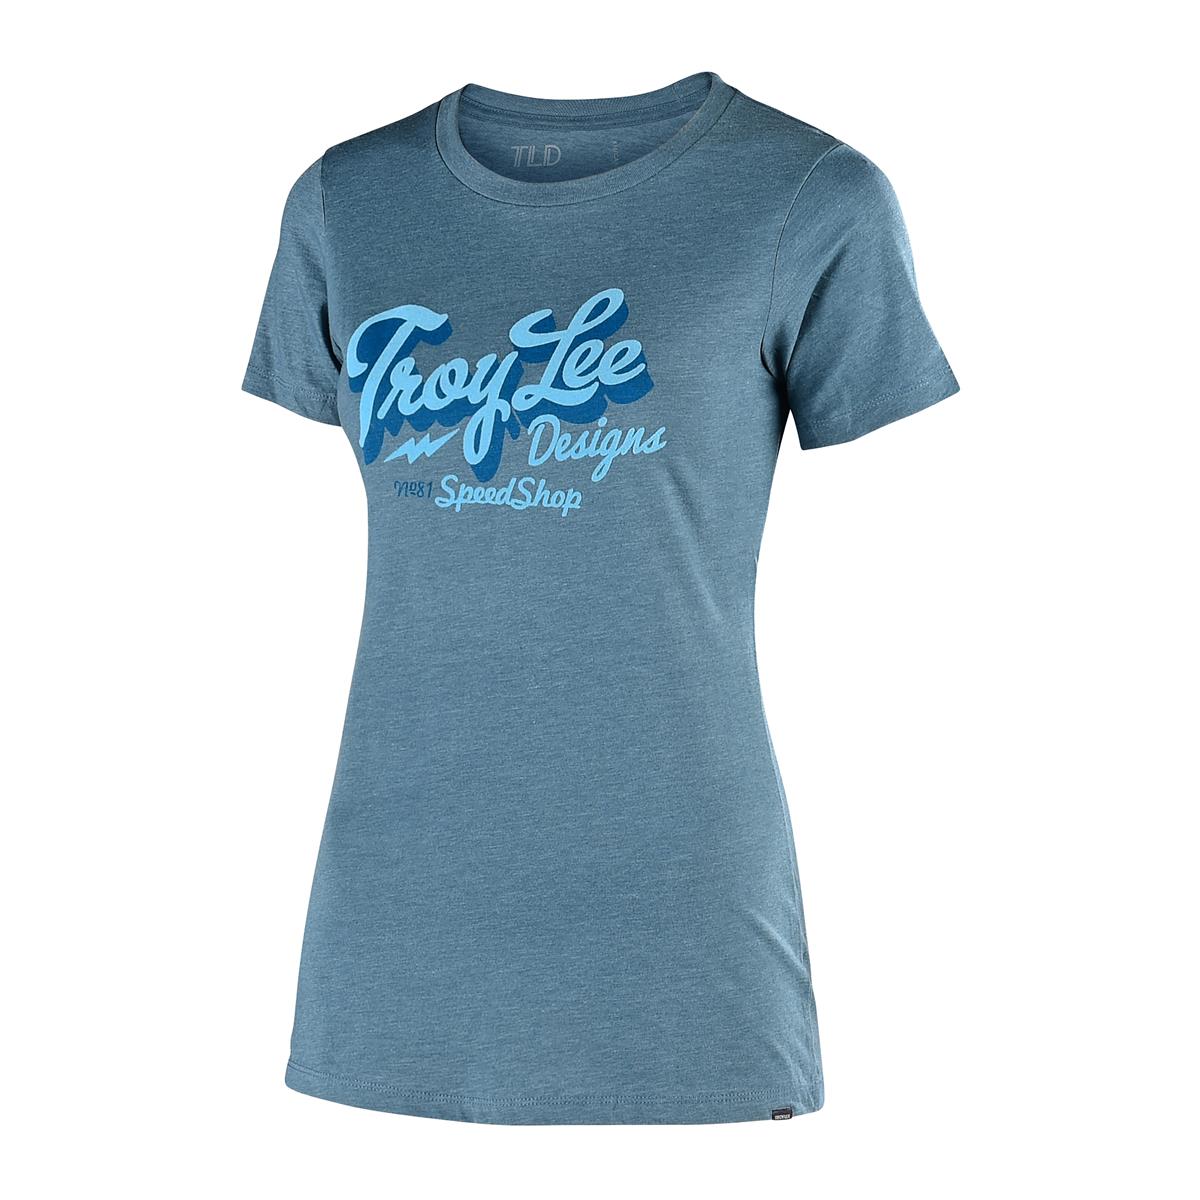 Troy Lee Designs Girls T-Shirt Vintage Speed Shop Indigo